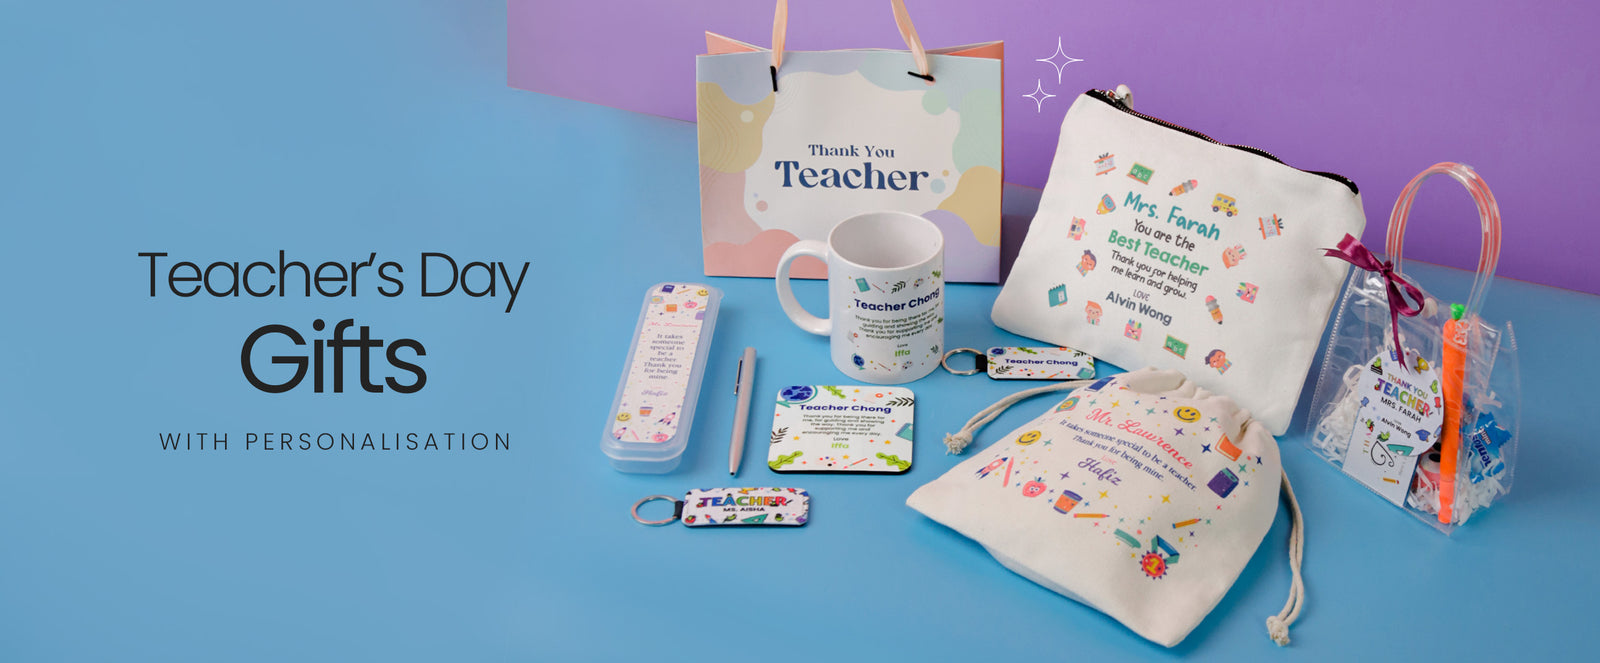 Amazing DIY Teacher's Day Gift Ideas During Quarantine |Teachers Day Gifts  | Teachers Day Gifts 2020 - YouTube